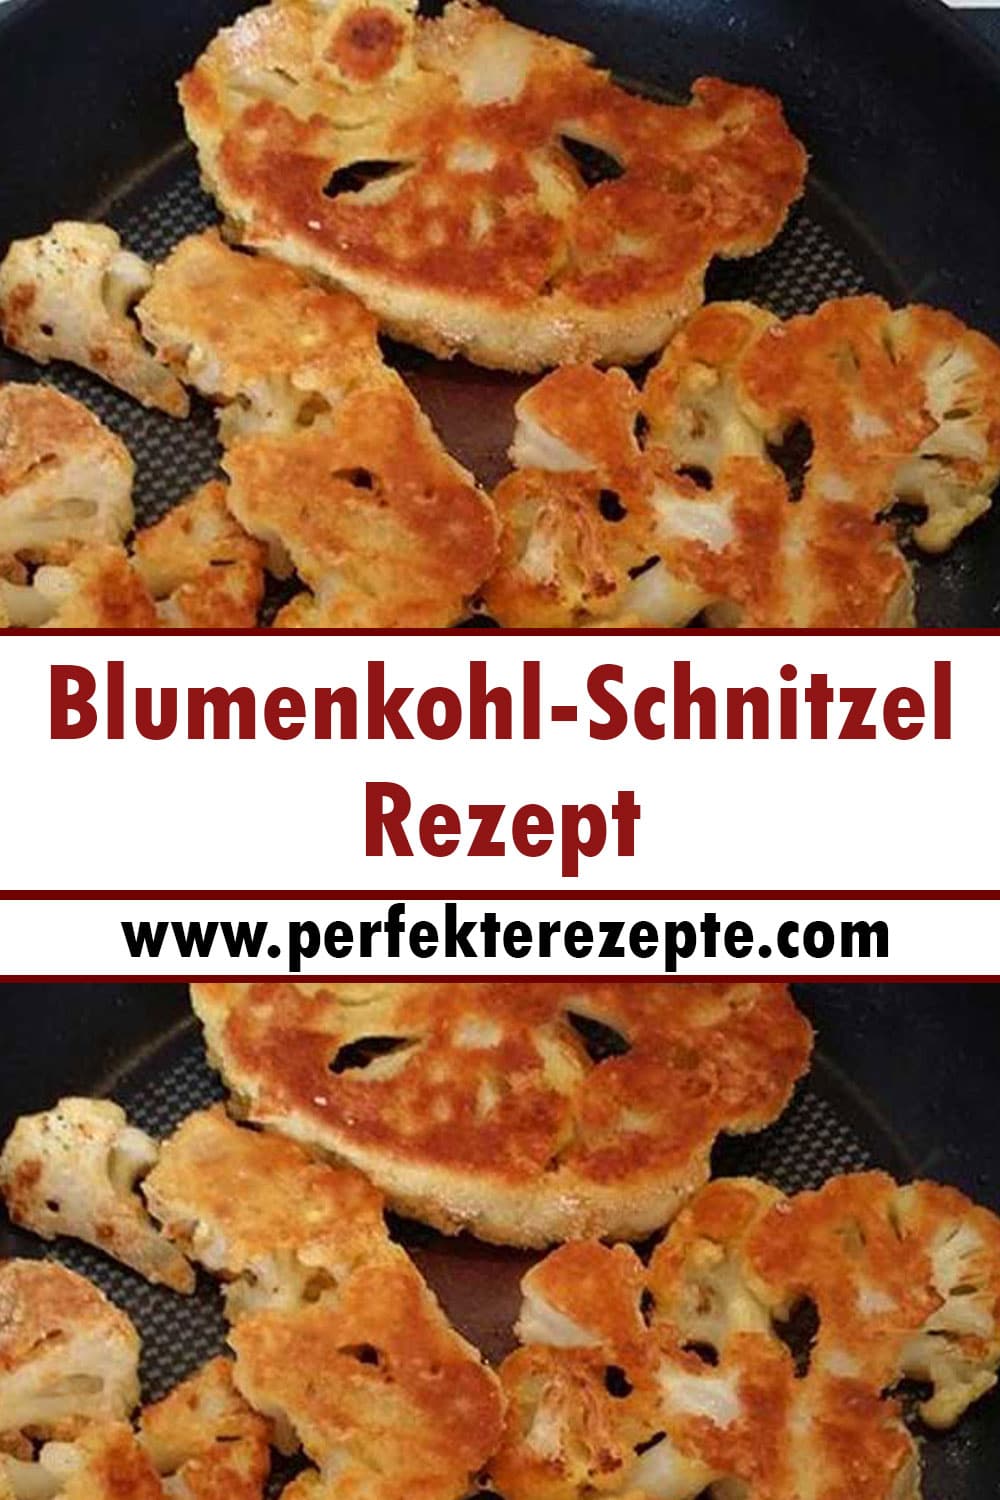 Blumenkohl-Schnitzel Rezept